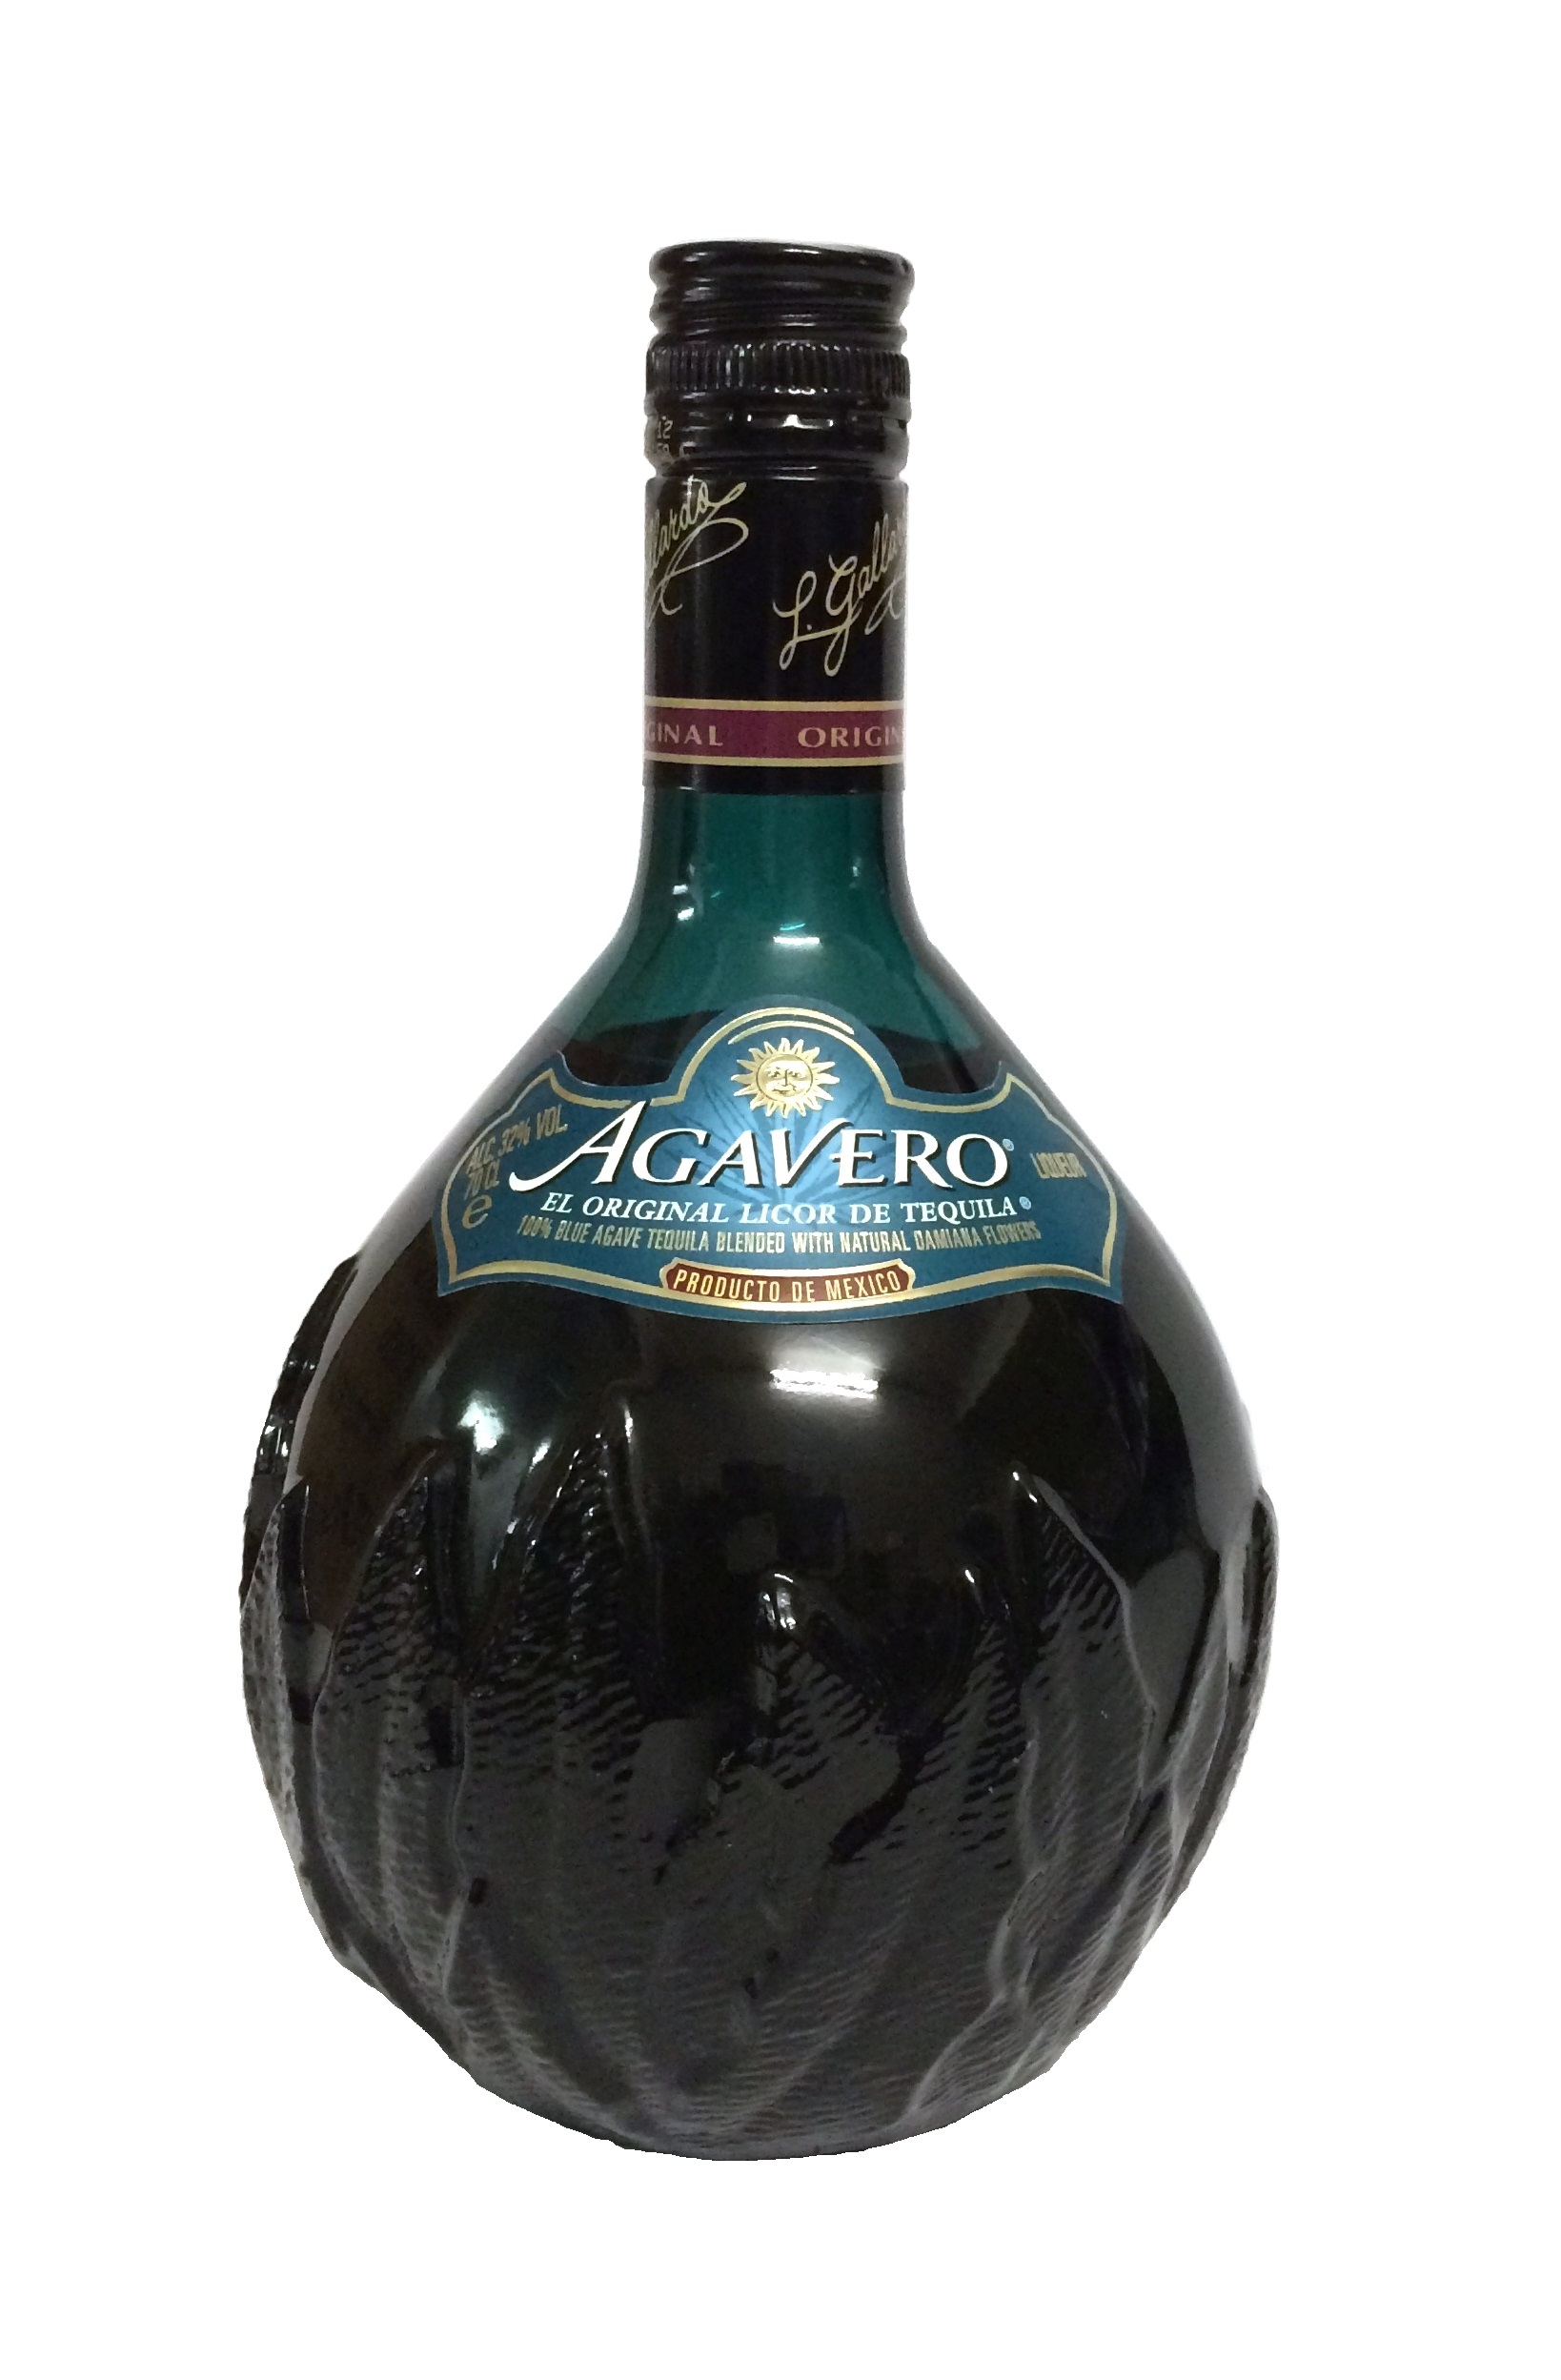 Tequila Likör Agavero der Marke José Cuervo 32% 0,7l Flasche